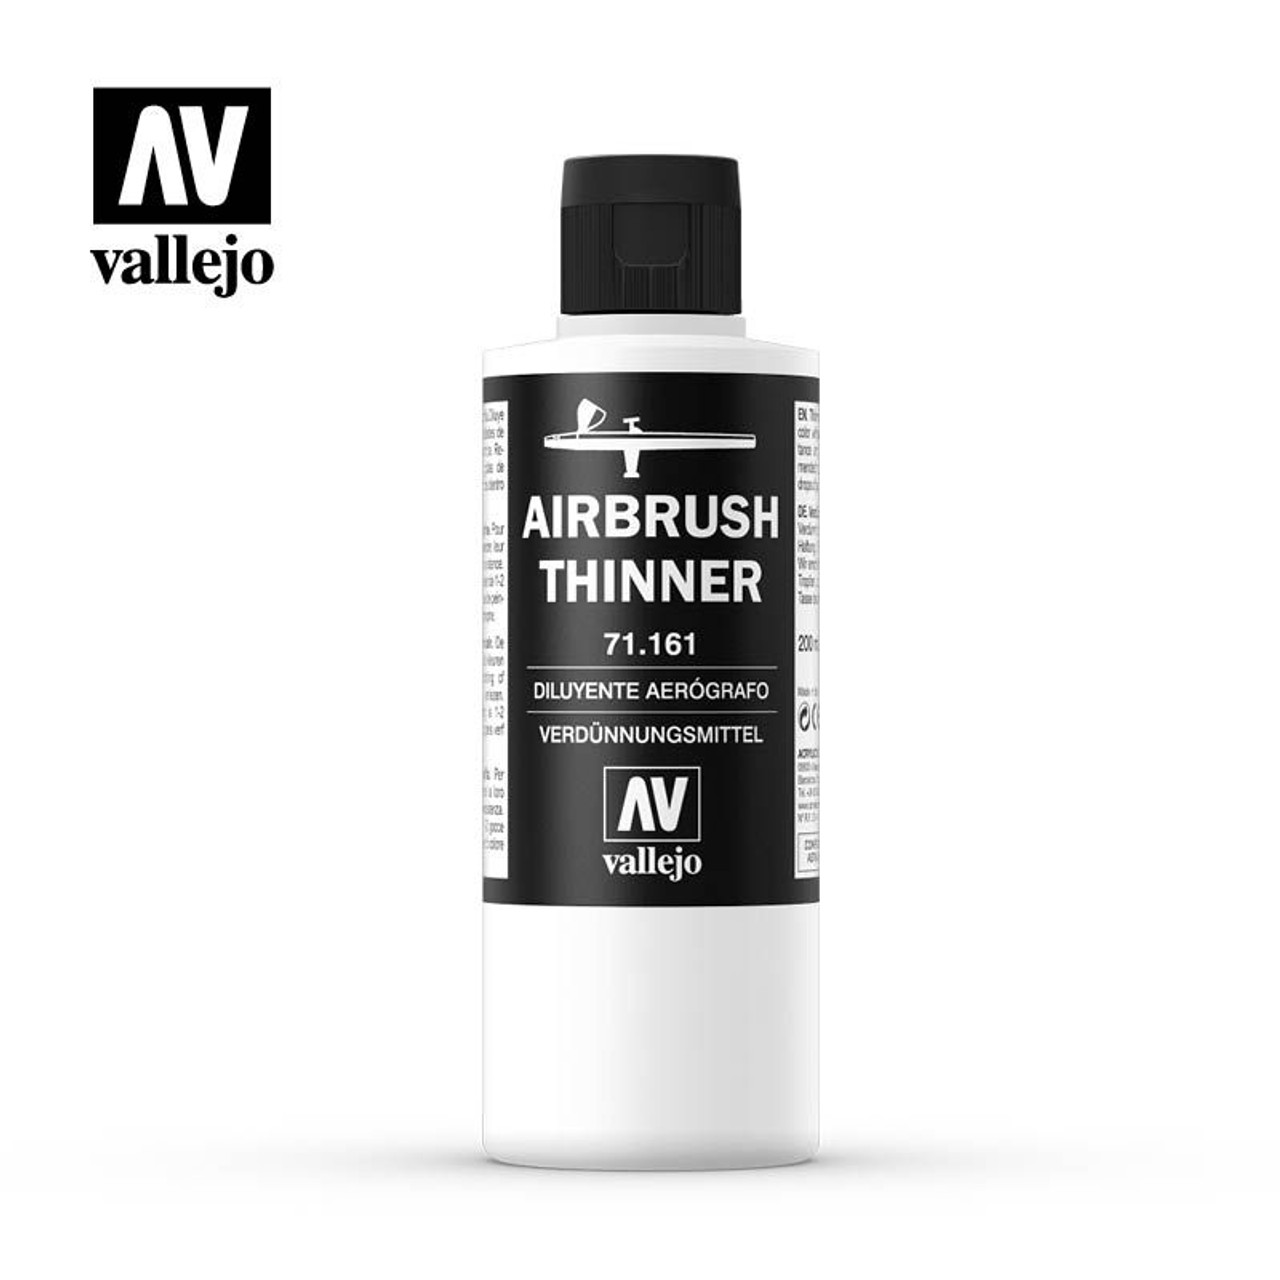 Vallejo Airbrush Thinner or Airbrush Flow Improver (or both) to thin my  paints? - Forum - DakkaDakka